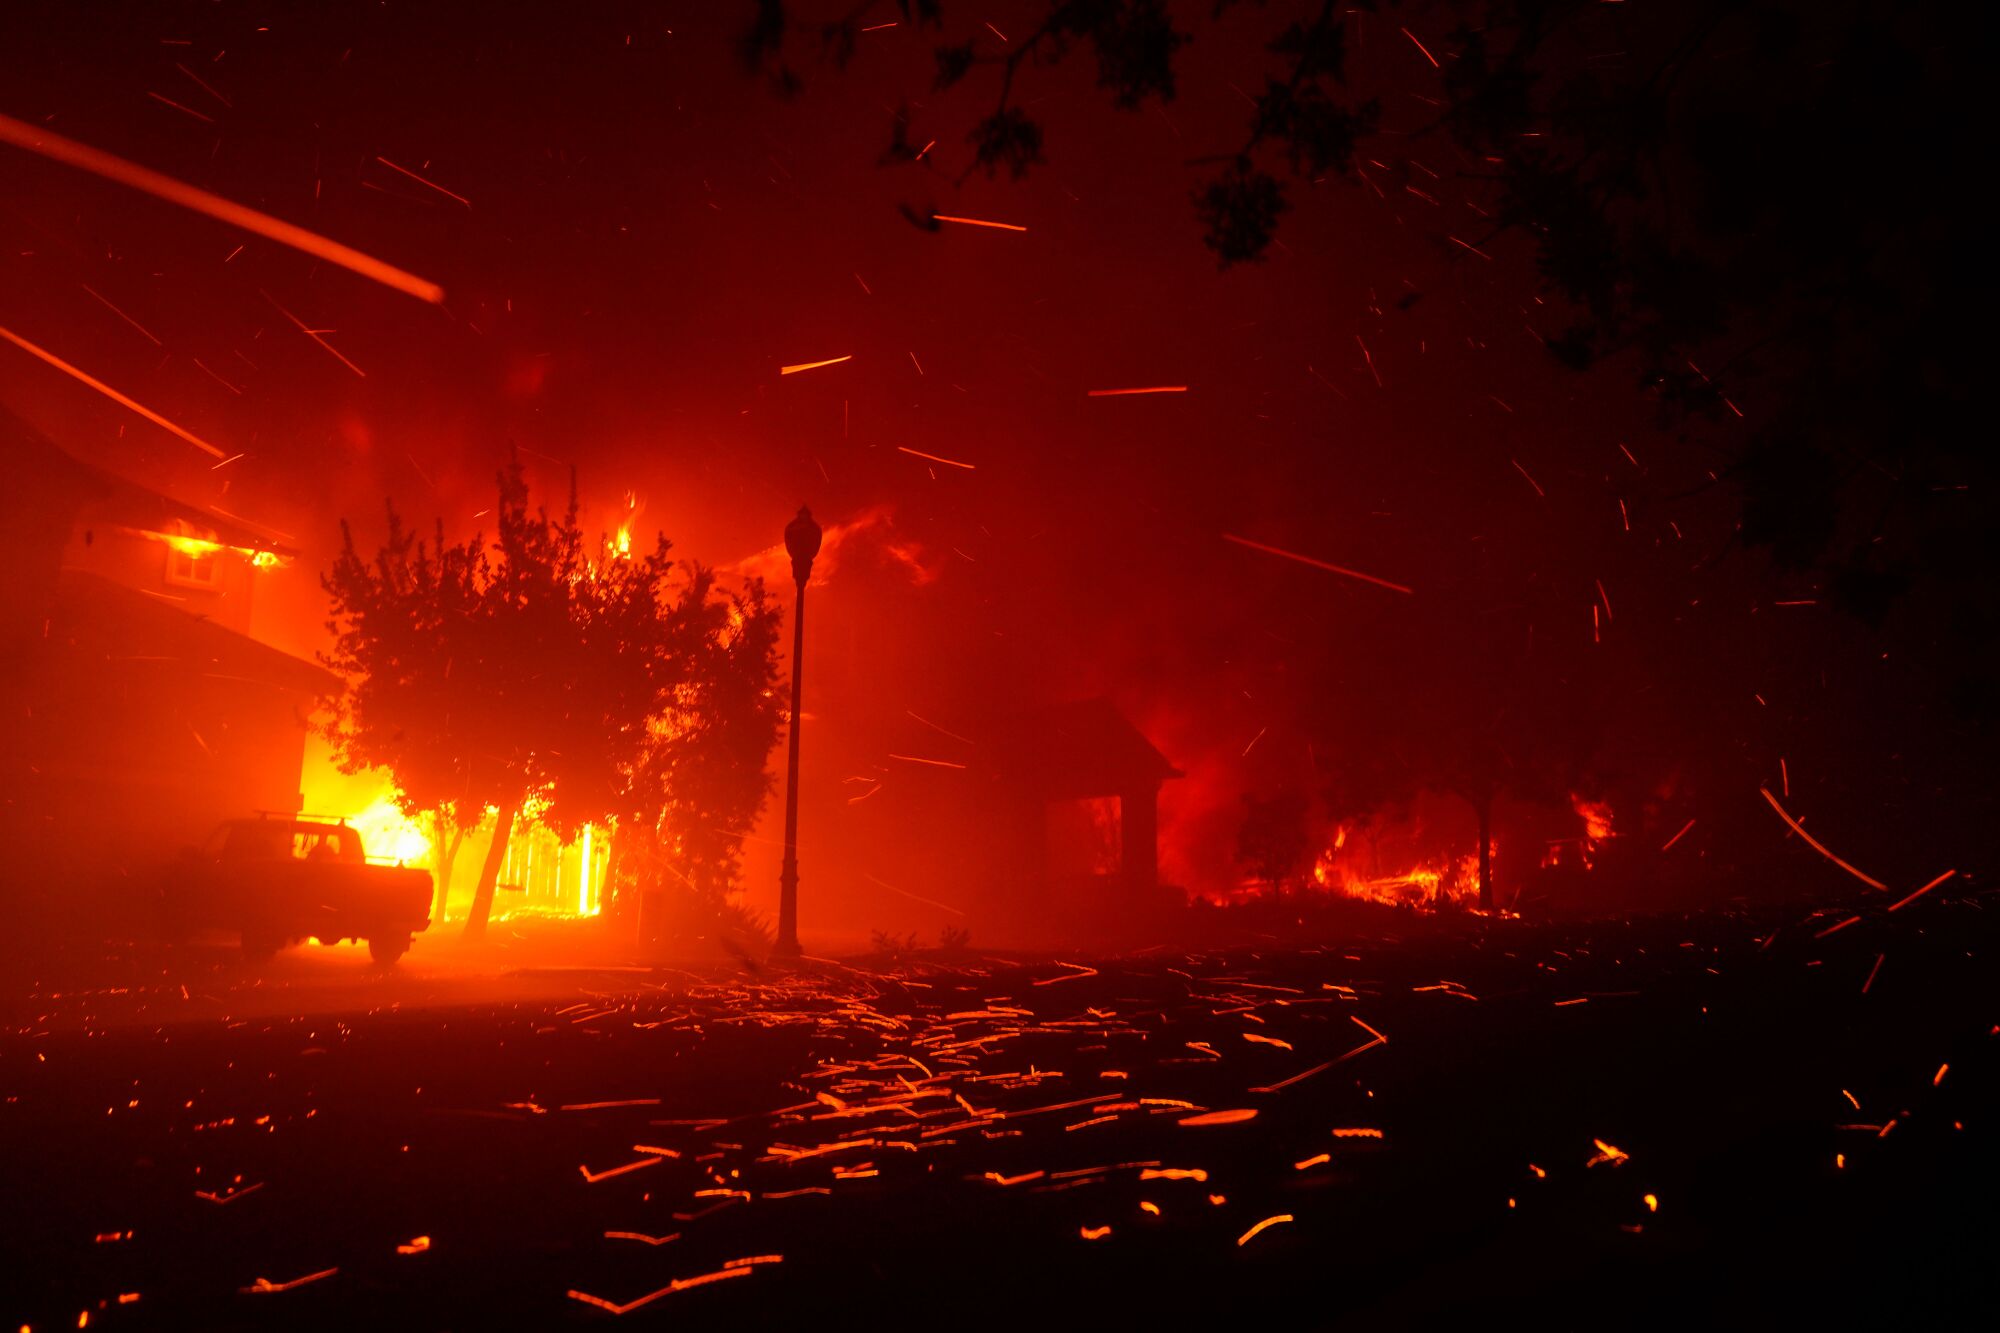 Burning embers look like streaks in the night sky as flames engulf structures in Santa Rosa.